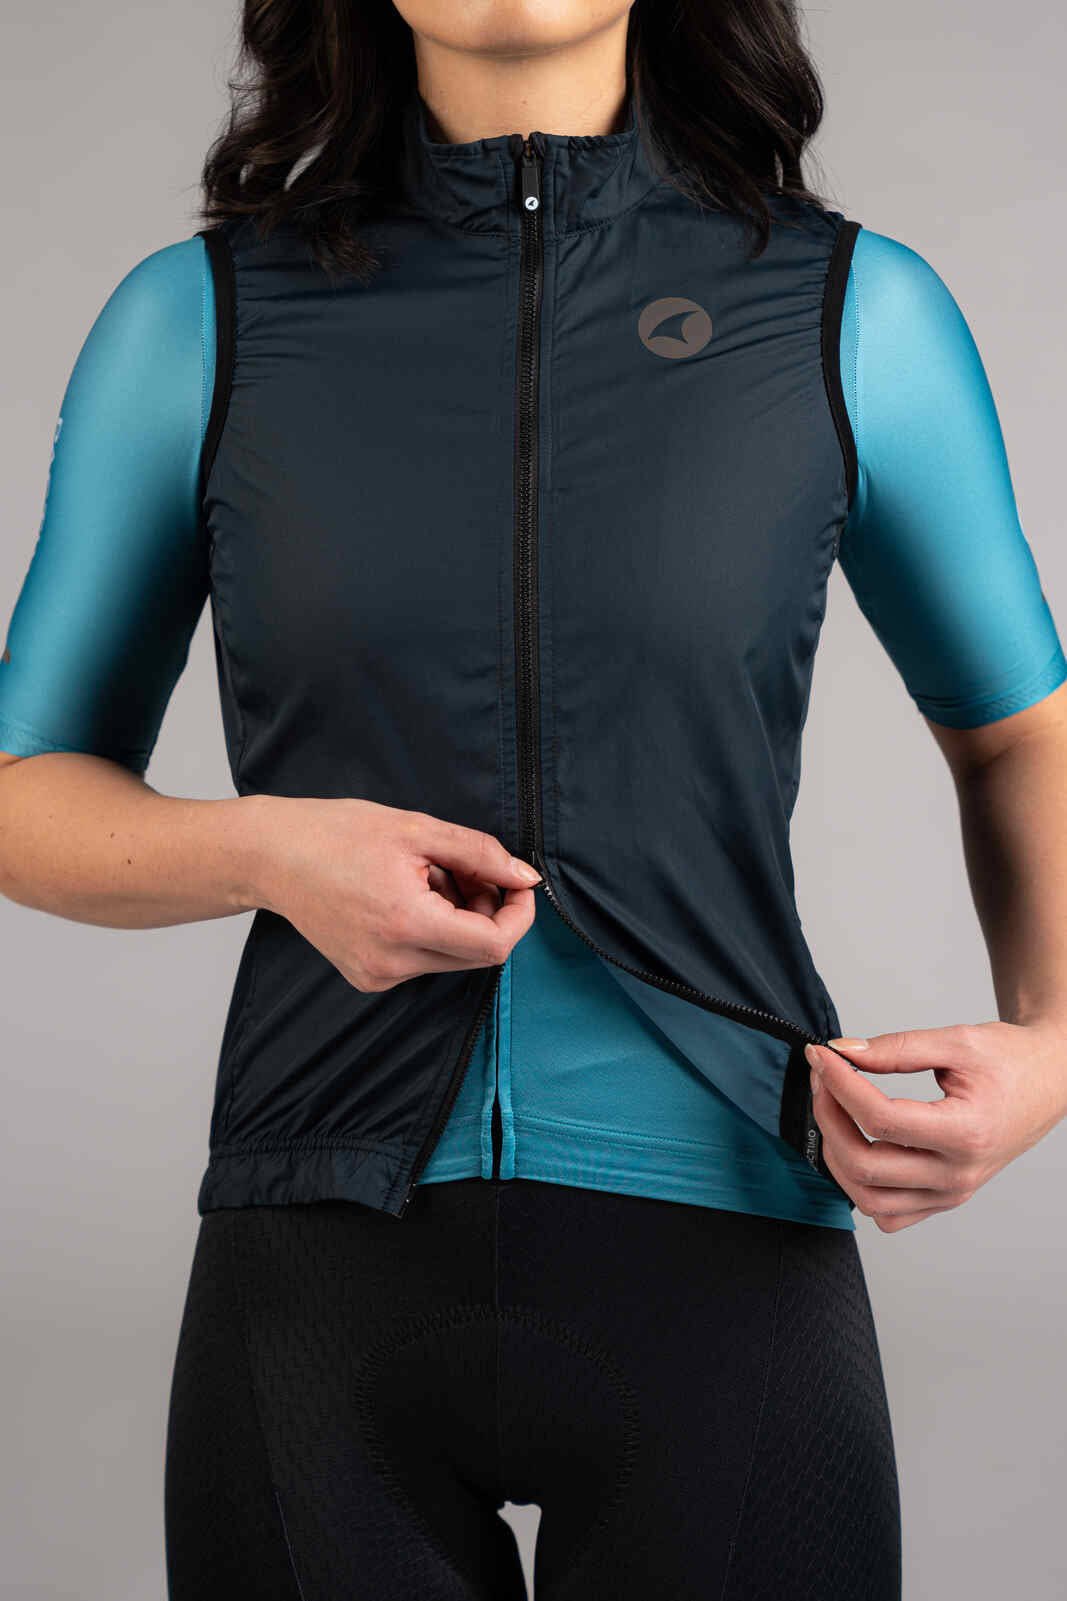 Women's Navy Blue Packable Cycling Wind Vest - Two-Way Zipper